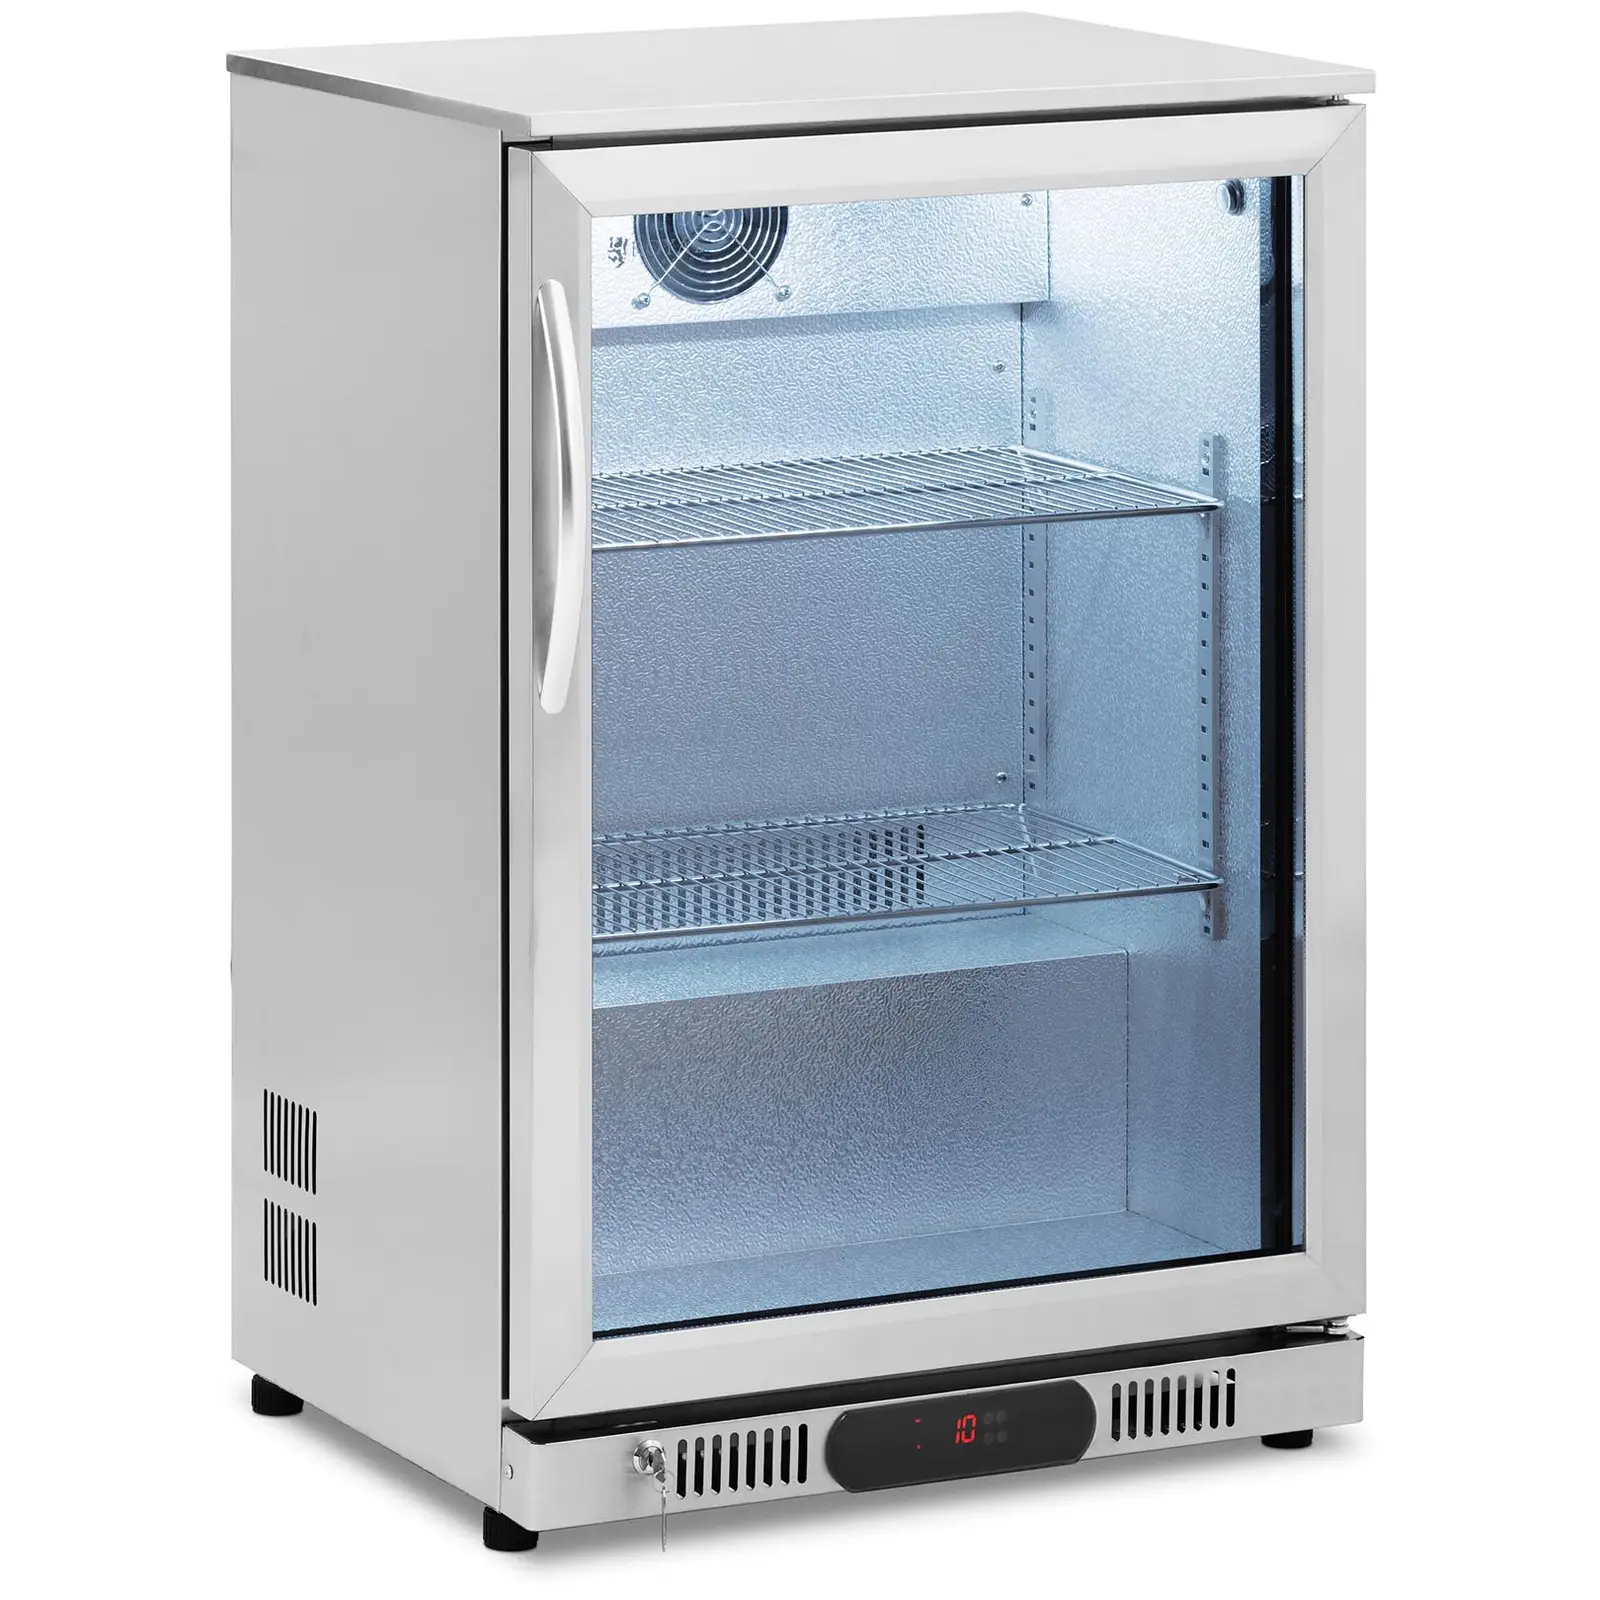 Vetrina frigo per bibite - 138 l - Royal Catering - Acciaio inox